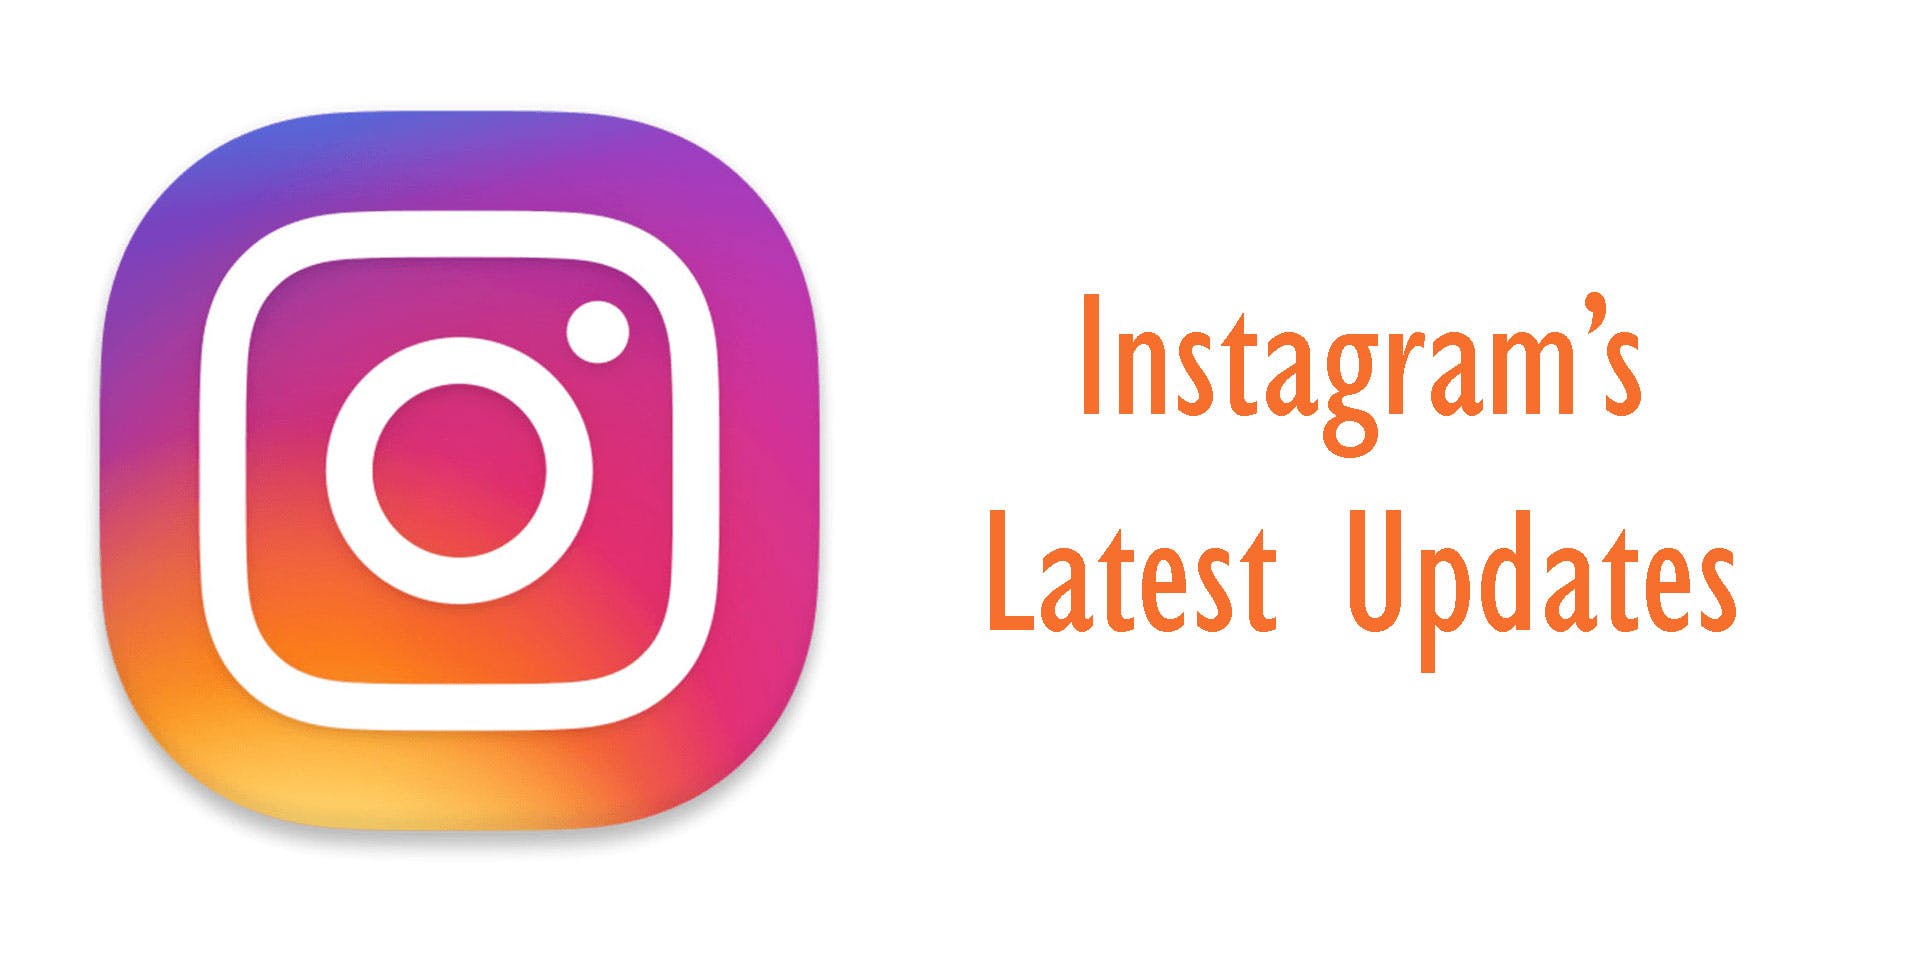 Instagram's Latest Updates